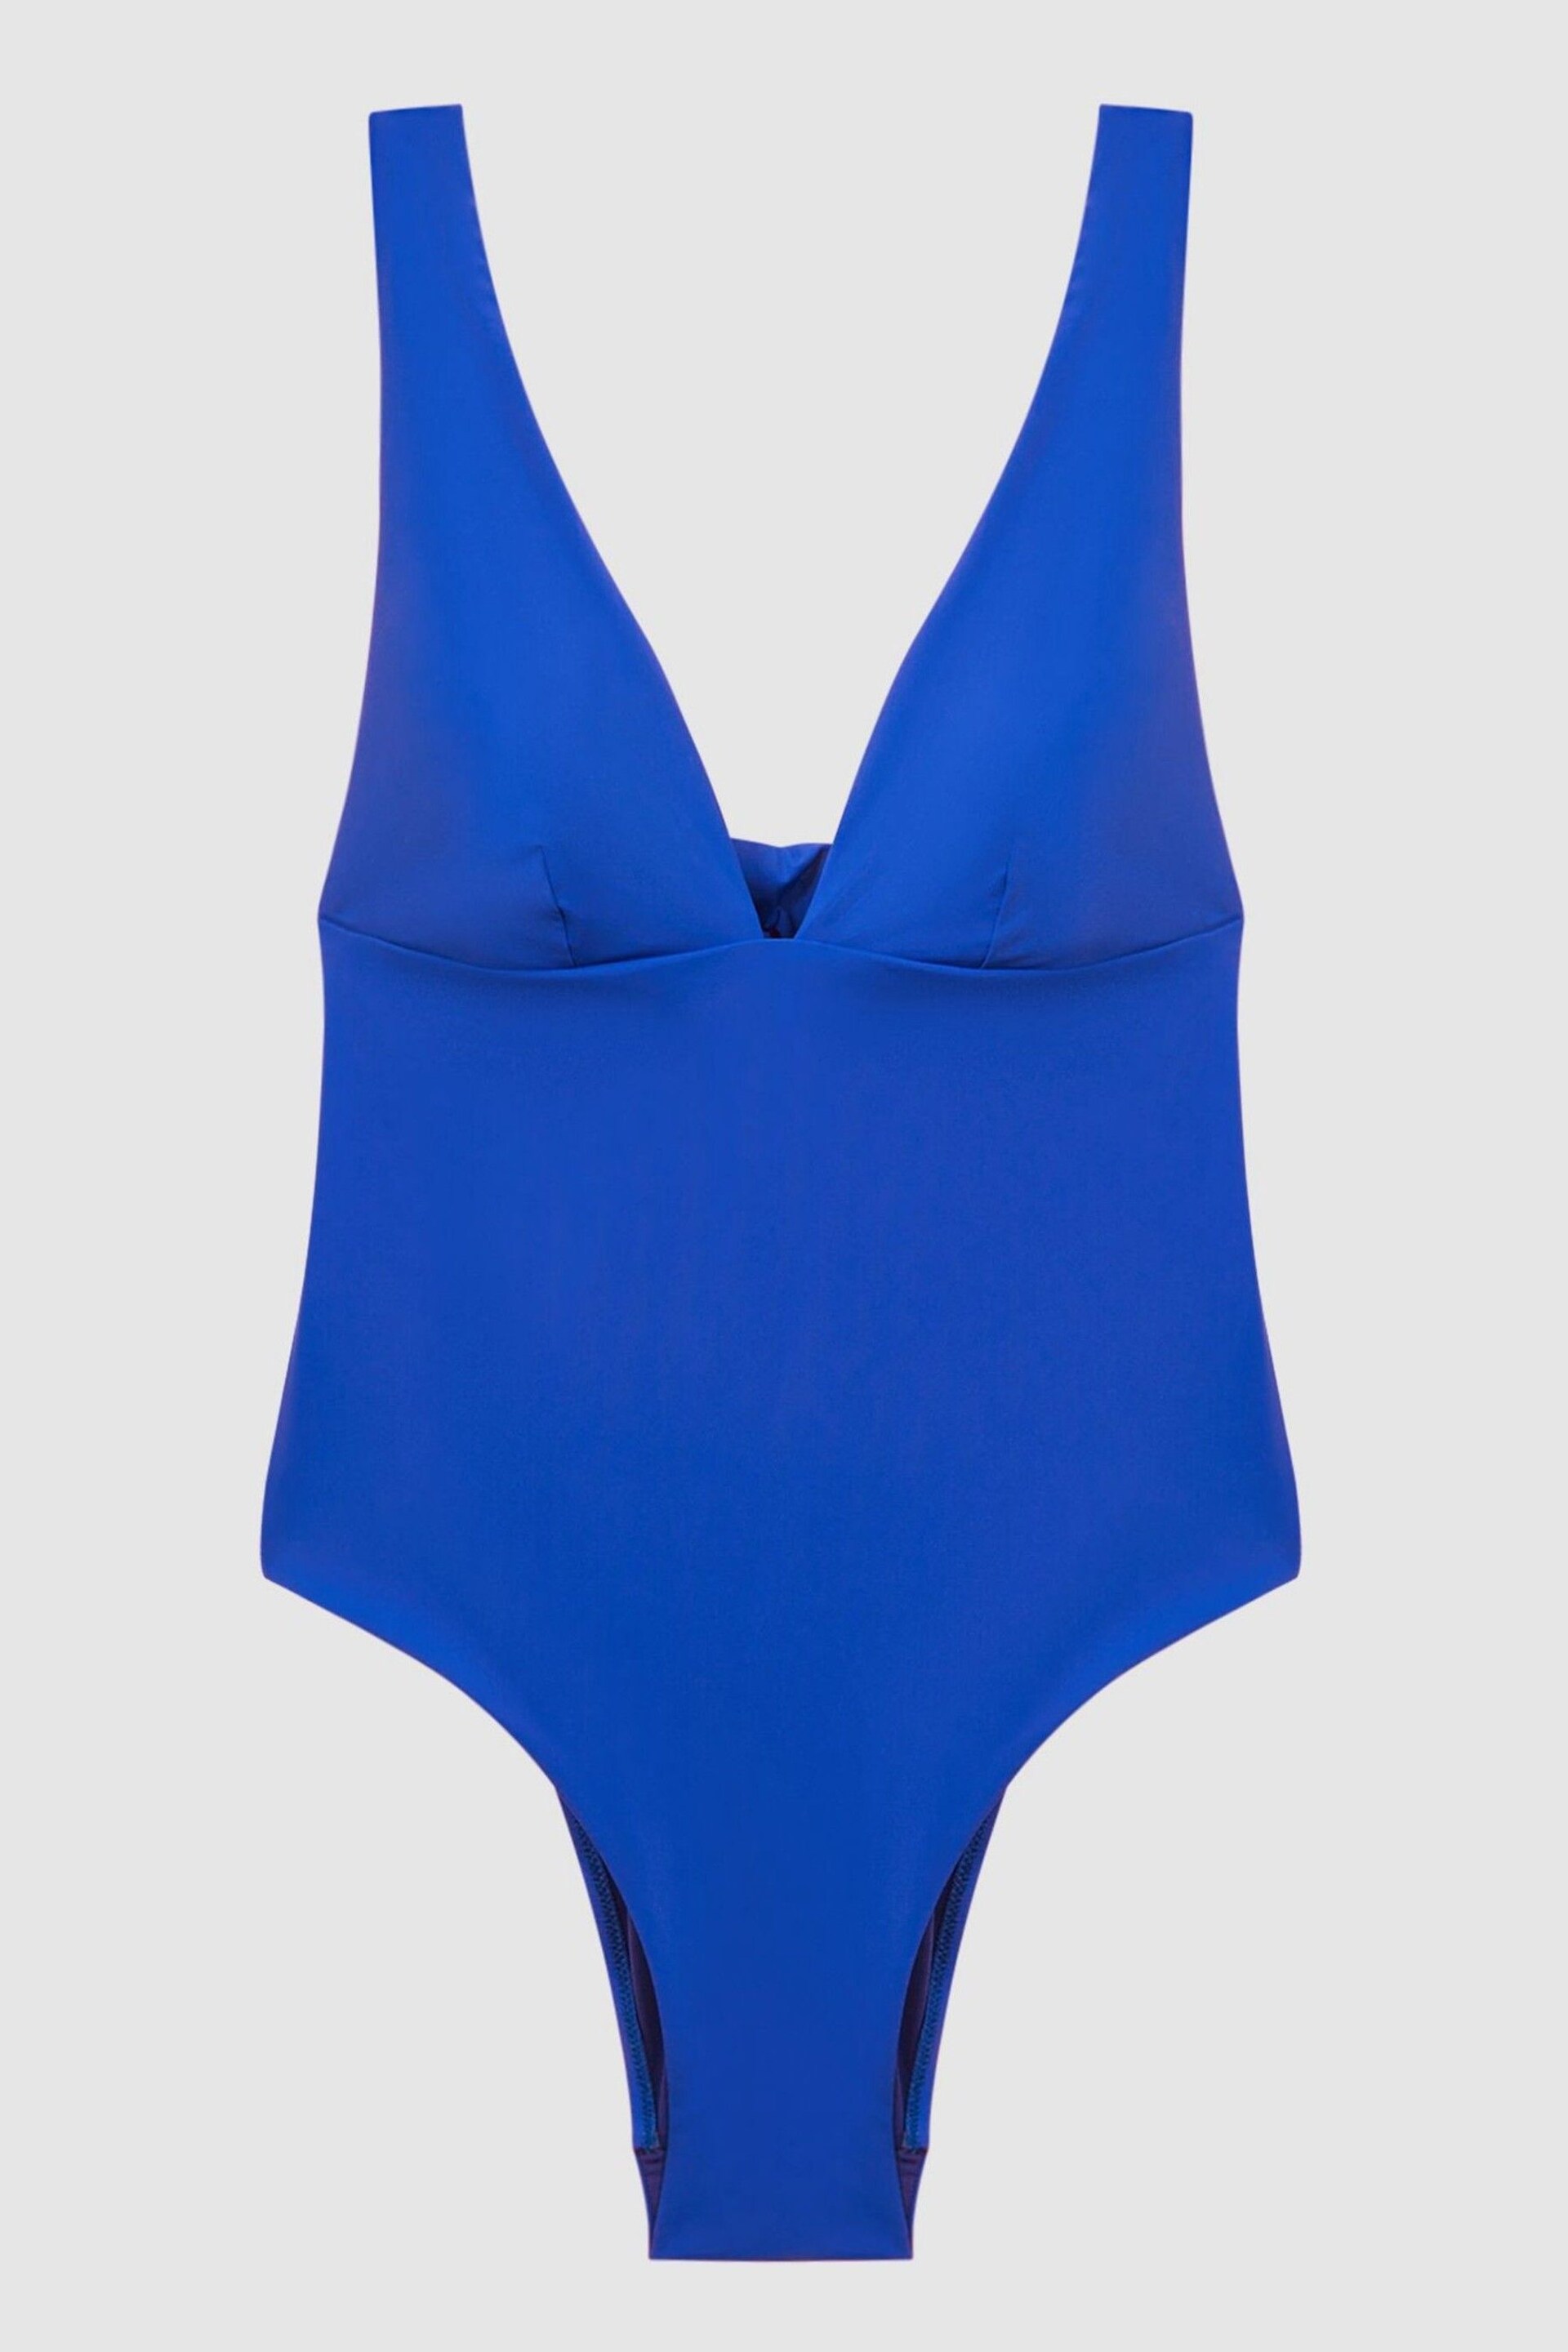 Reiss Blue Luna Italian Fabric Swimsuit - Image 2 of 5